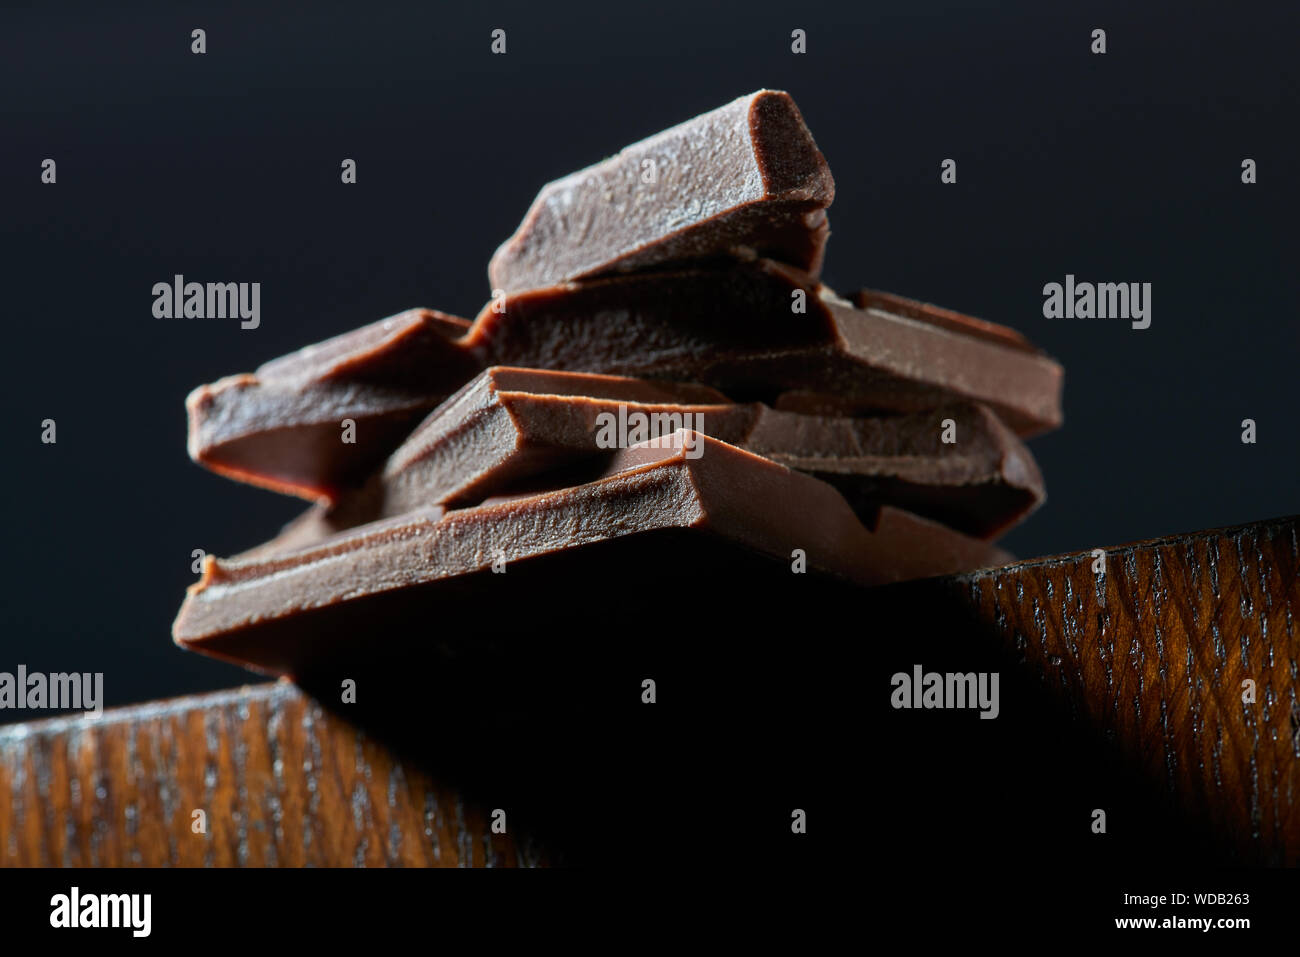 Chocolate chunks viewed from below. Sweet food photo concept. Dark background. Horizontal image Stock Photo